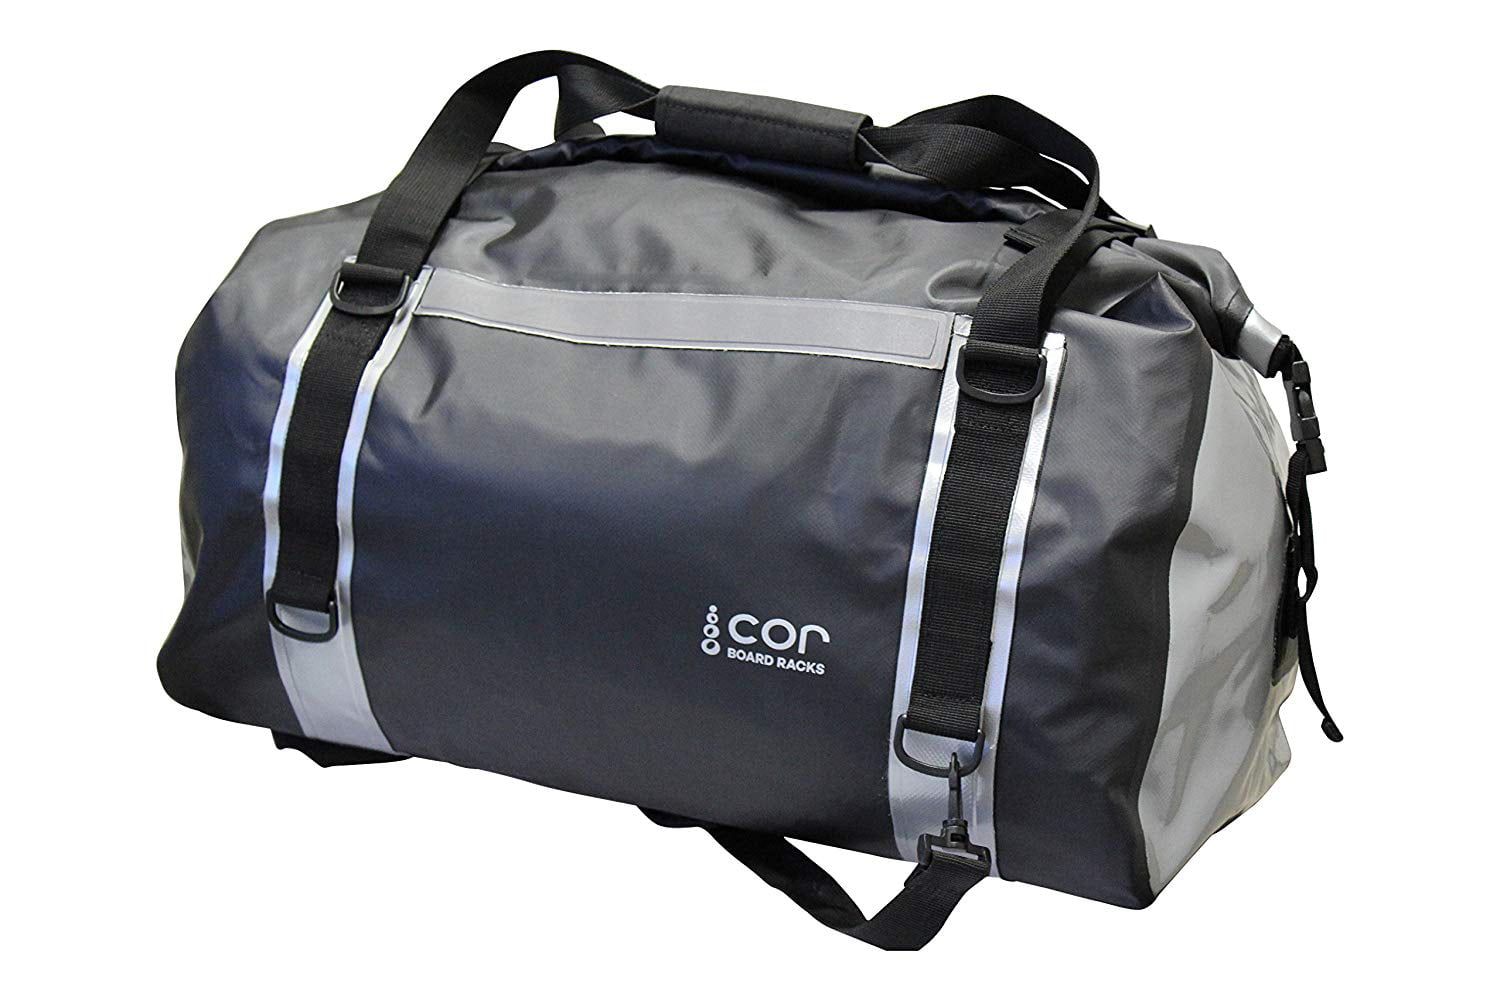 COR Waterproof 60L Duffel Bag 100% Waterproof Dry Bag Duffel Bag - Lightweight, Durable ...